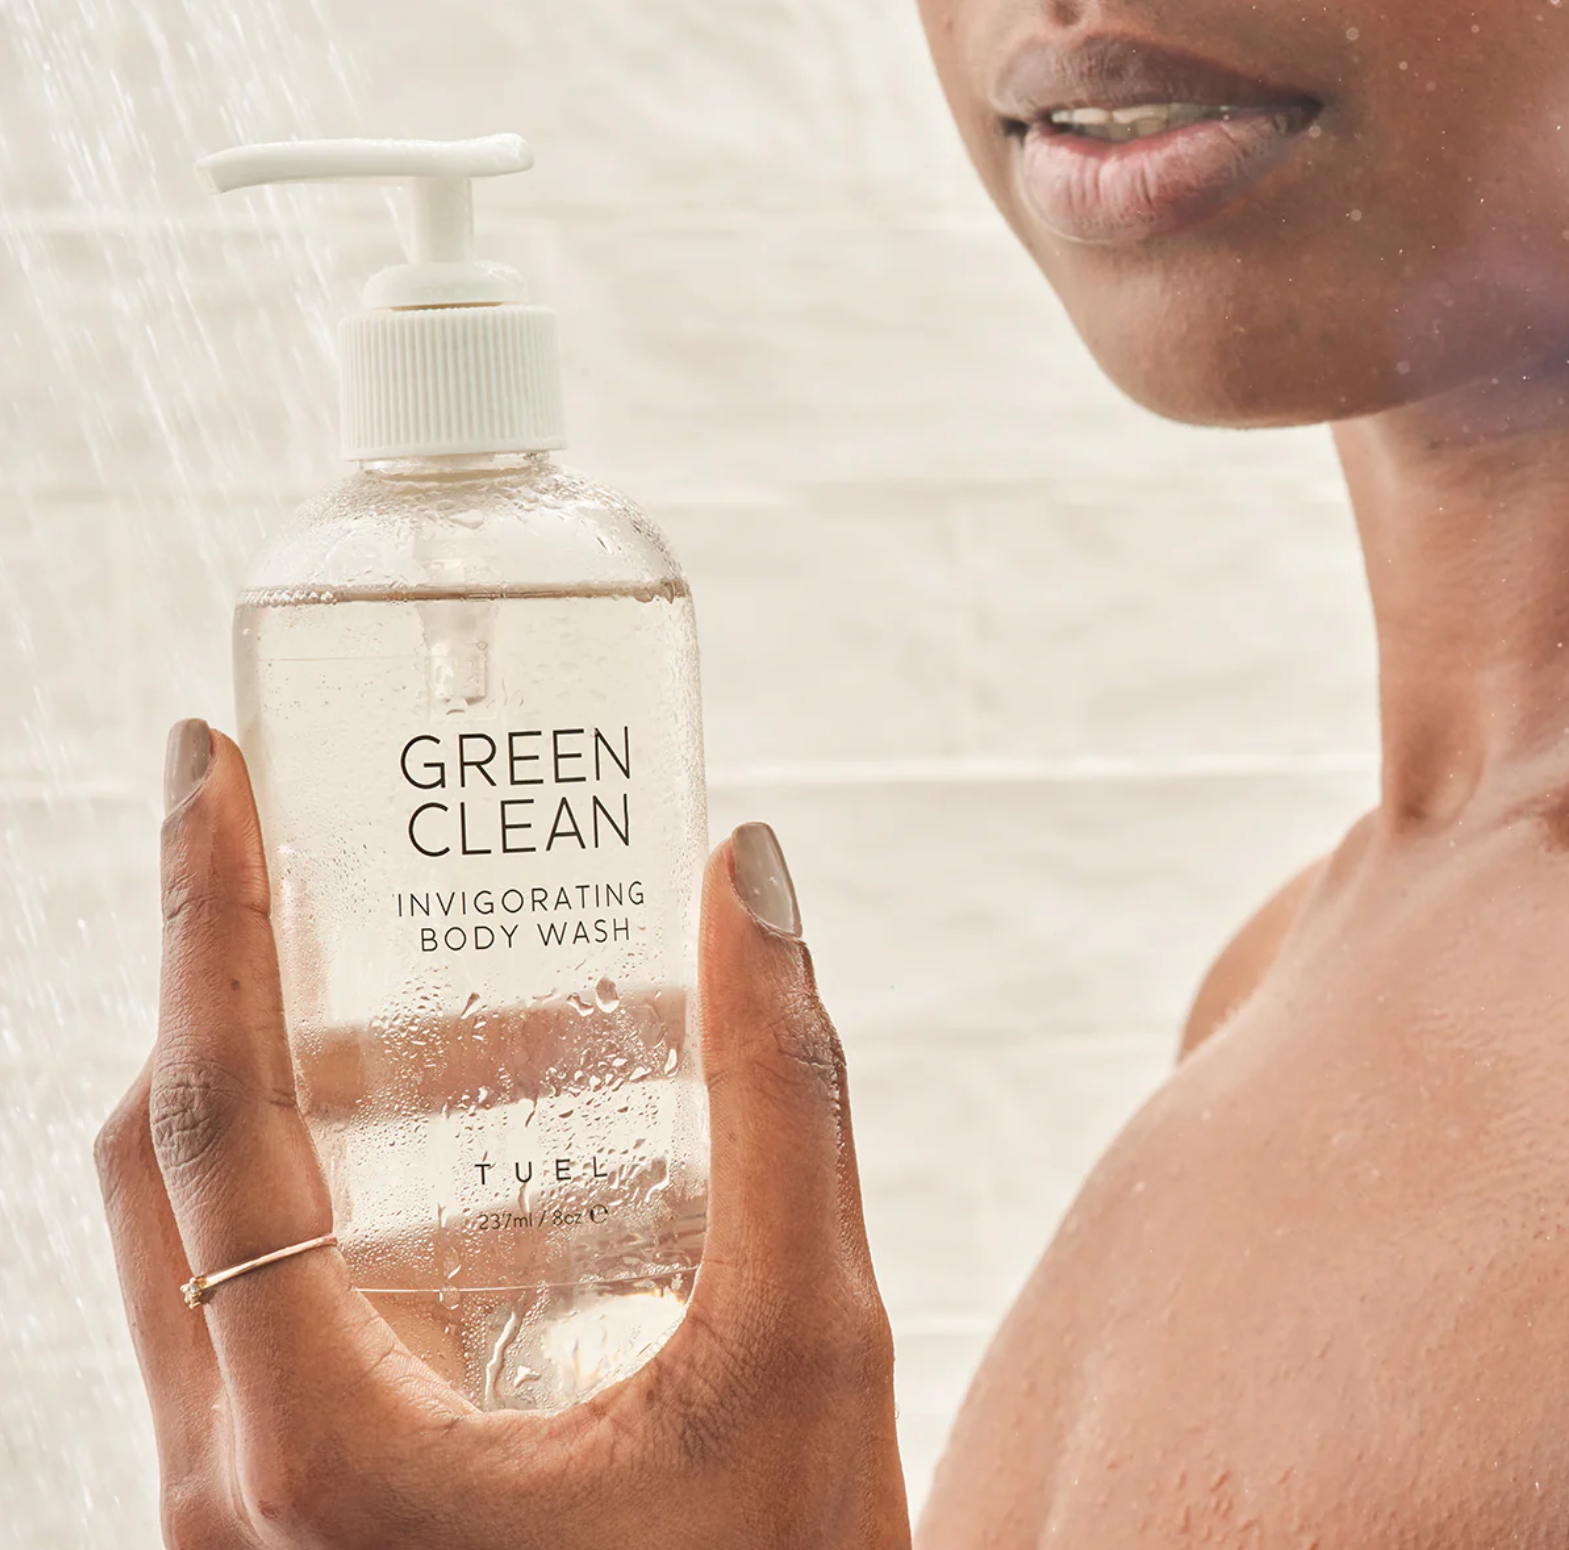 GREEN CLEAN INVIGORATING BODY WASH